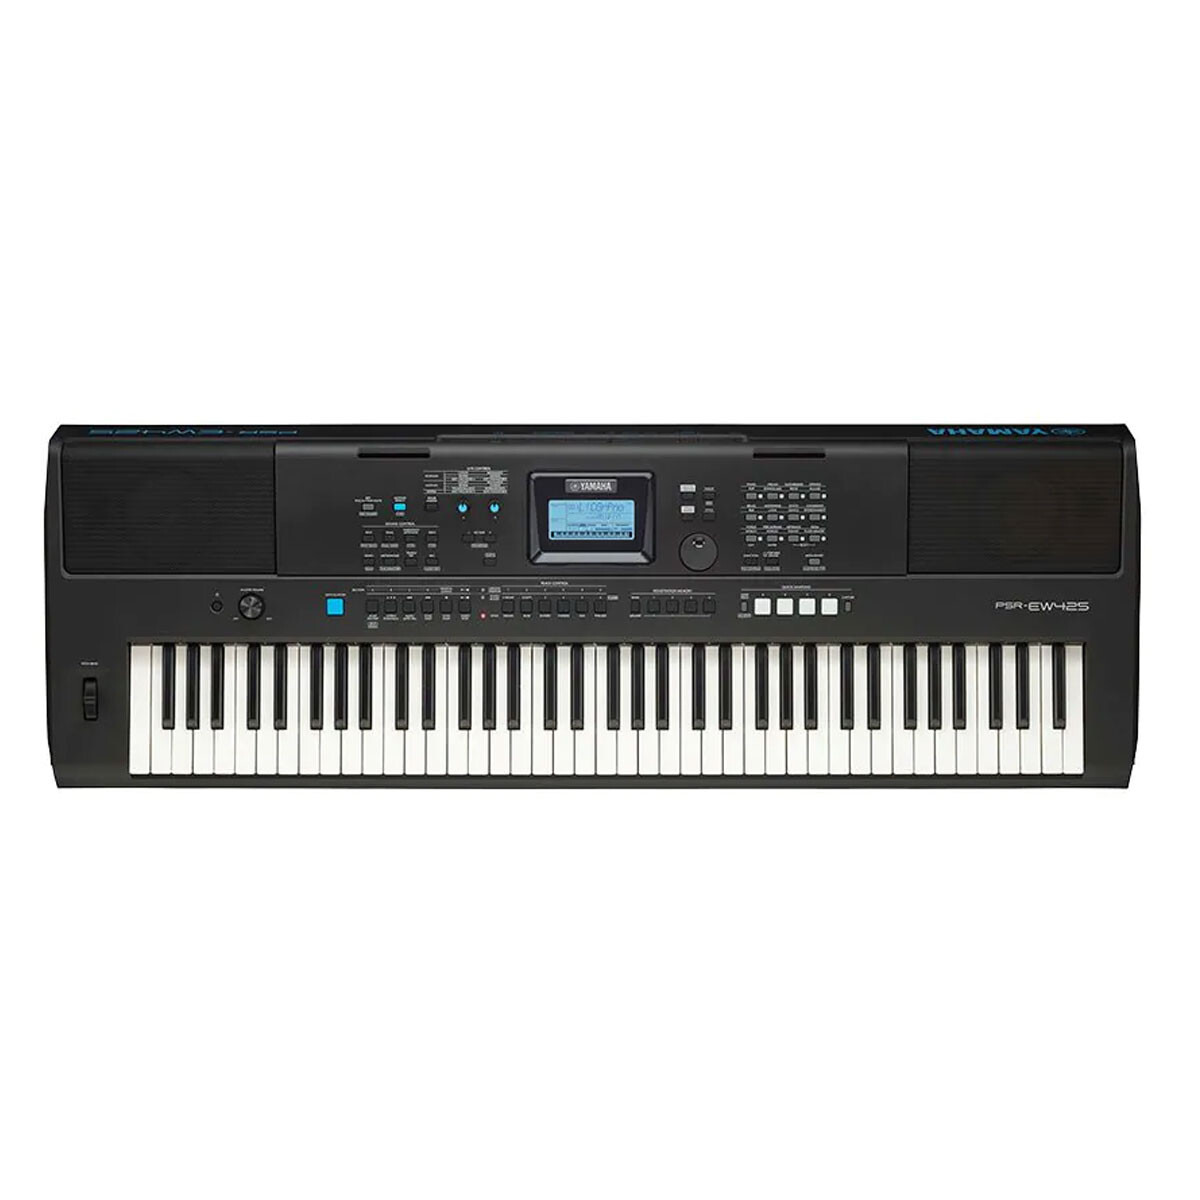 Organo Yamaha Psrew425 